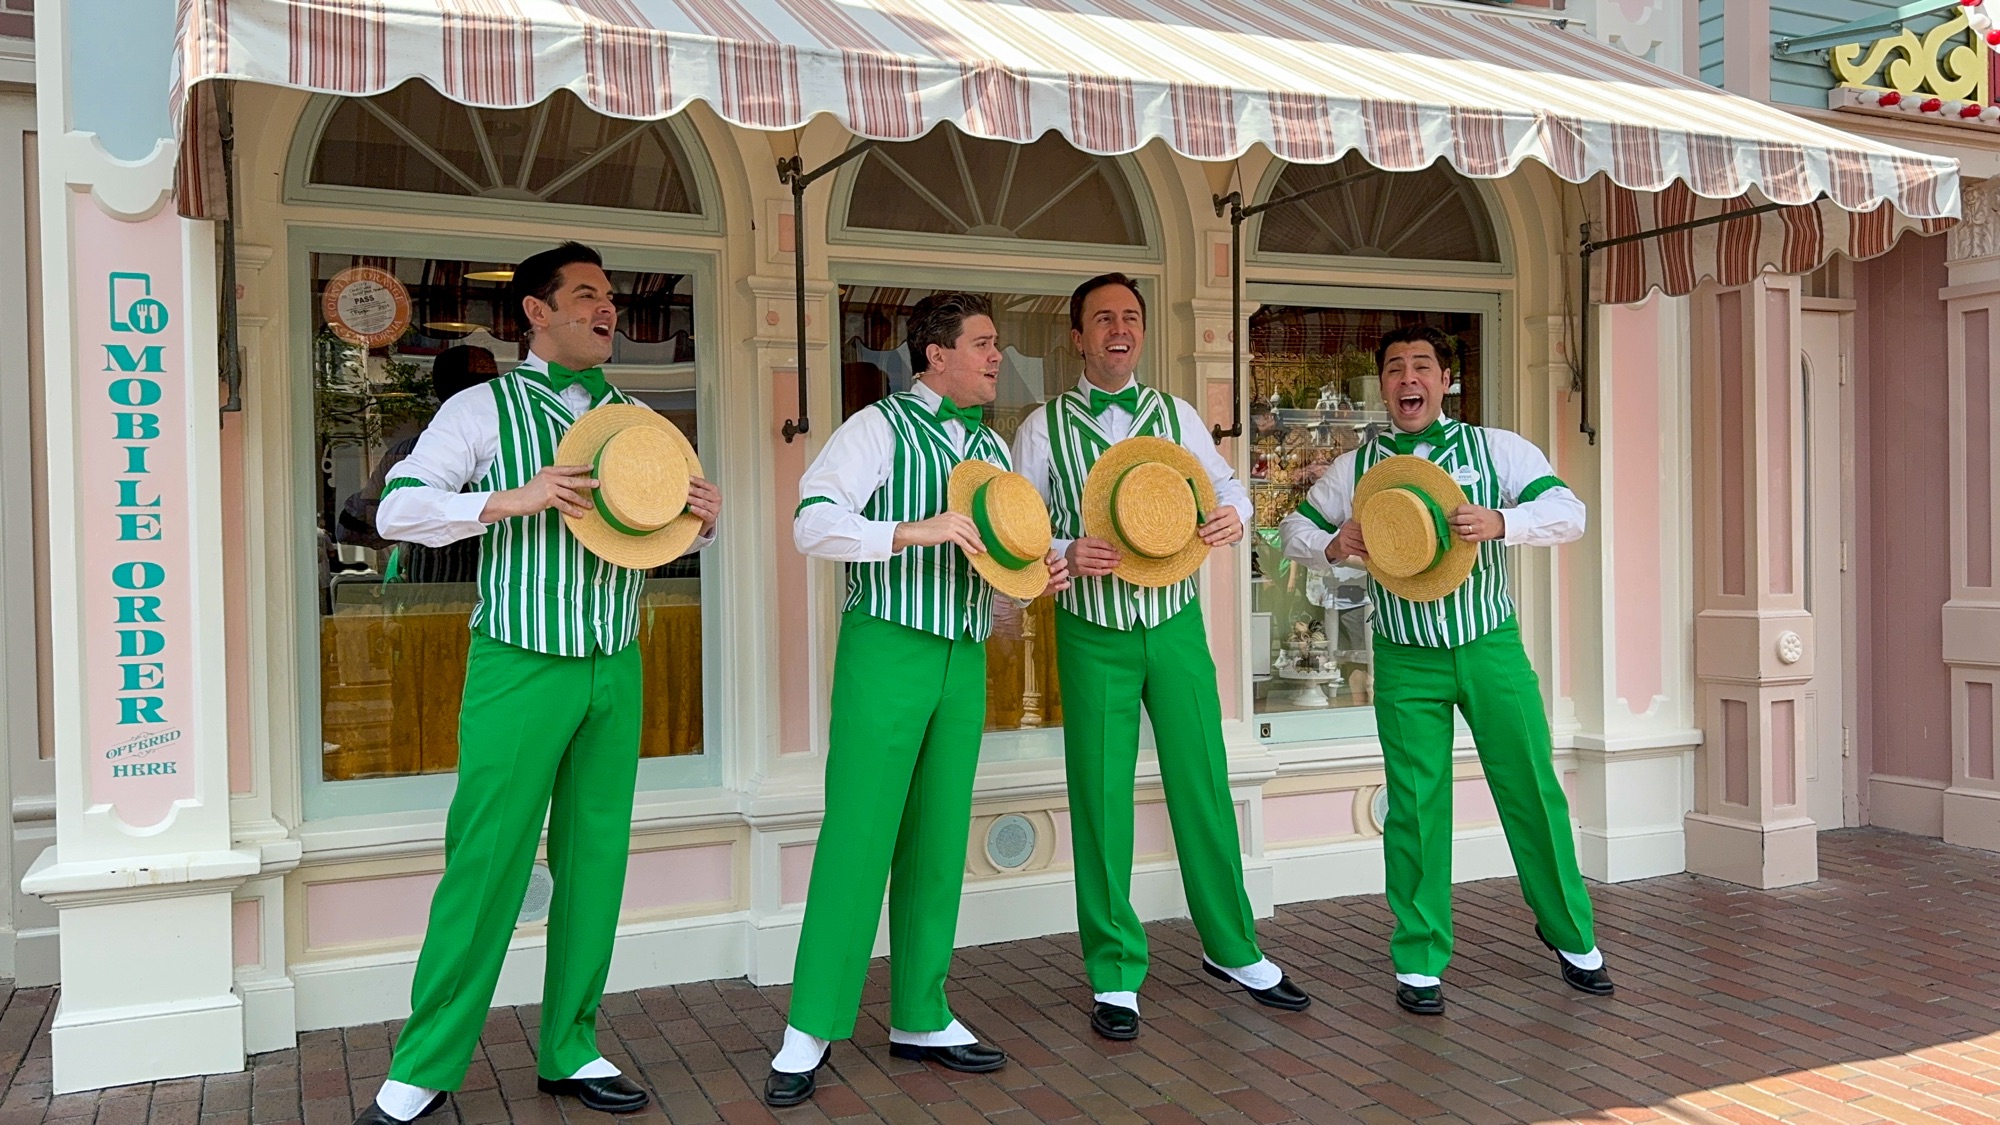 Dapper Dans Dress Their Irish Best for St. Patrick’s Day at Disneyland